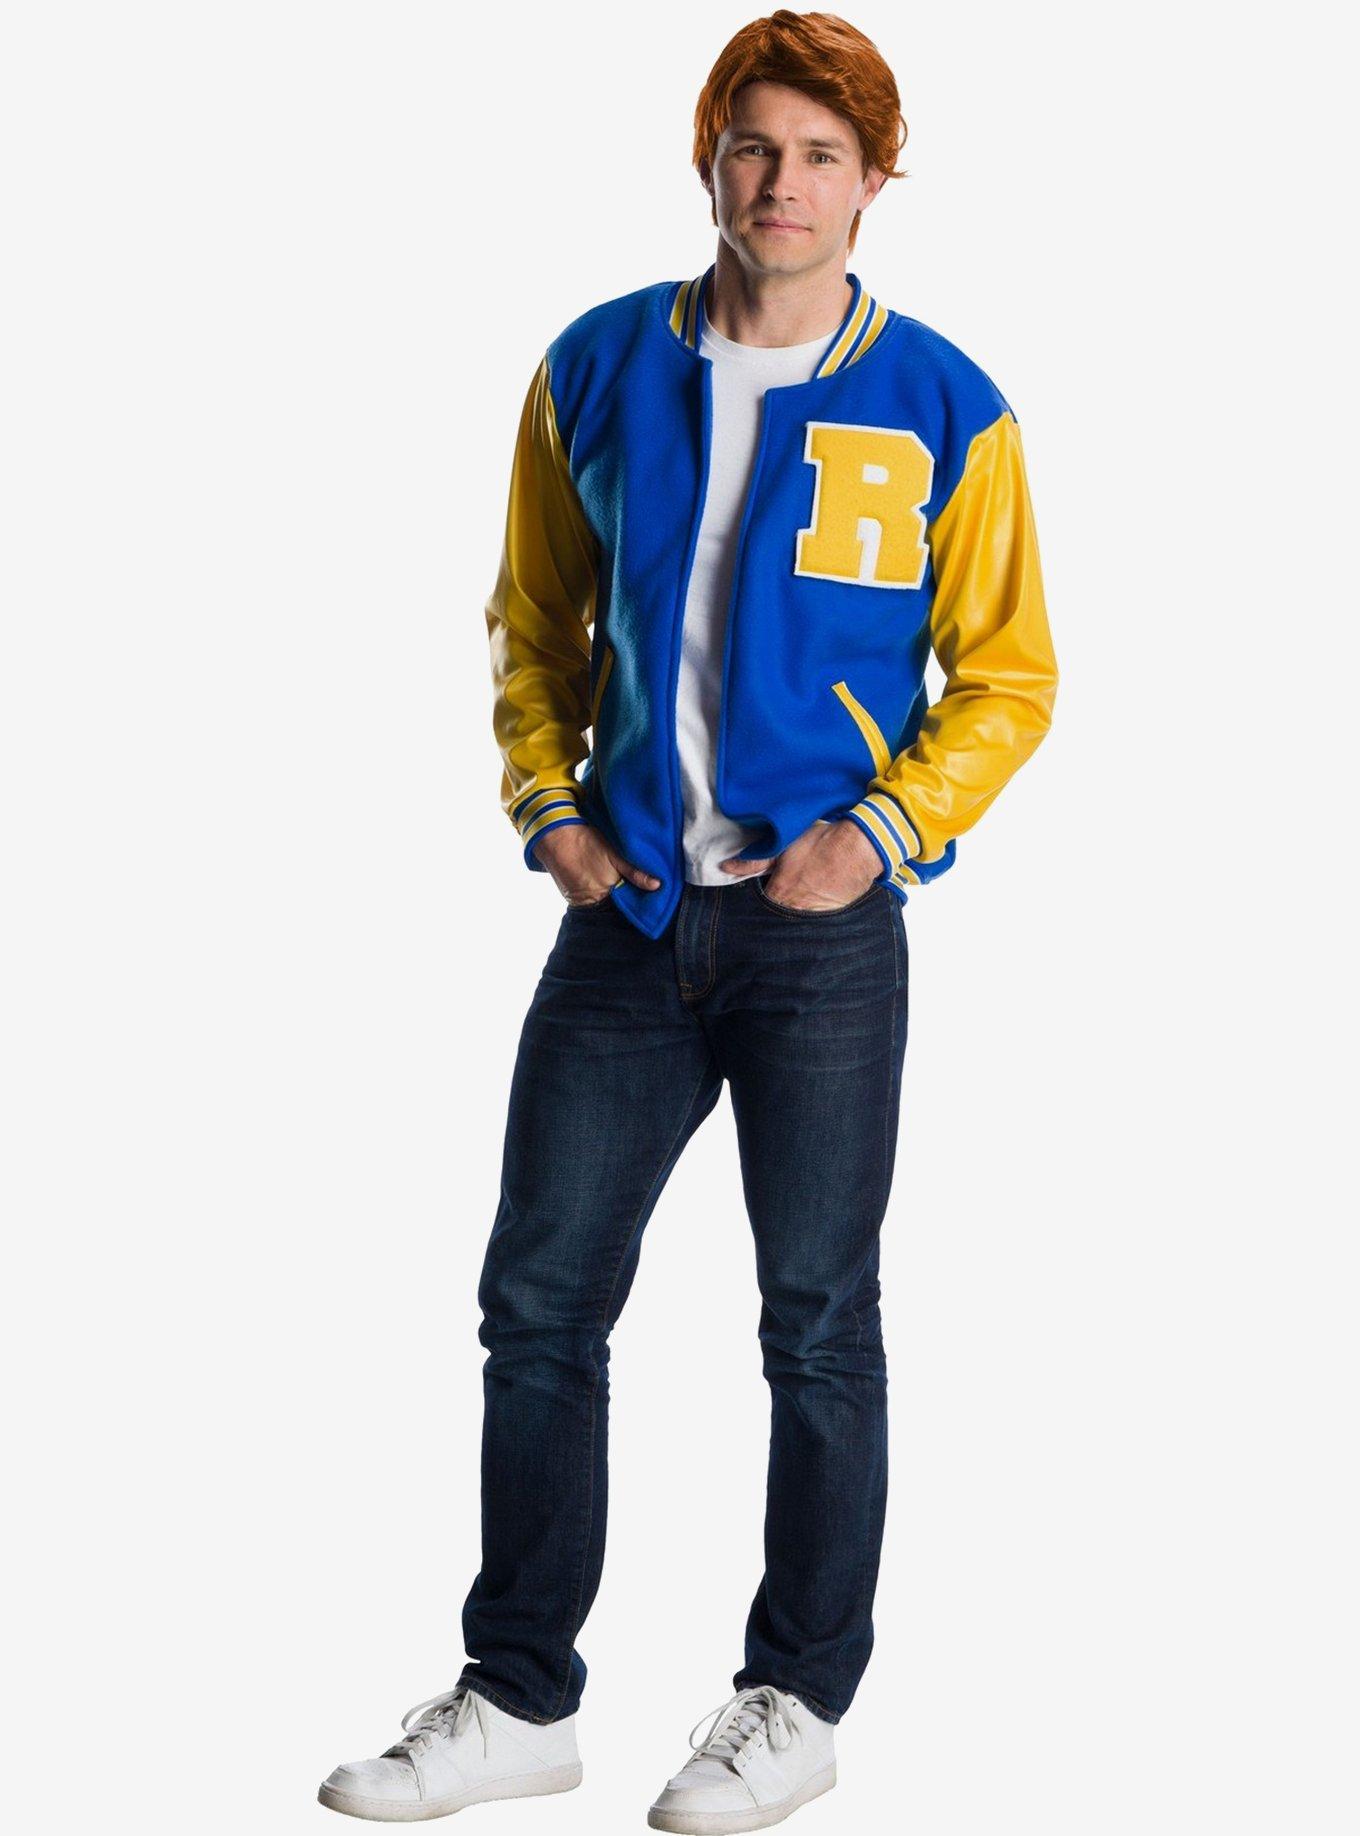 Riverdale Archie Andrews Deluxe Costume, BLUE, hi-res